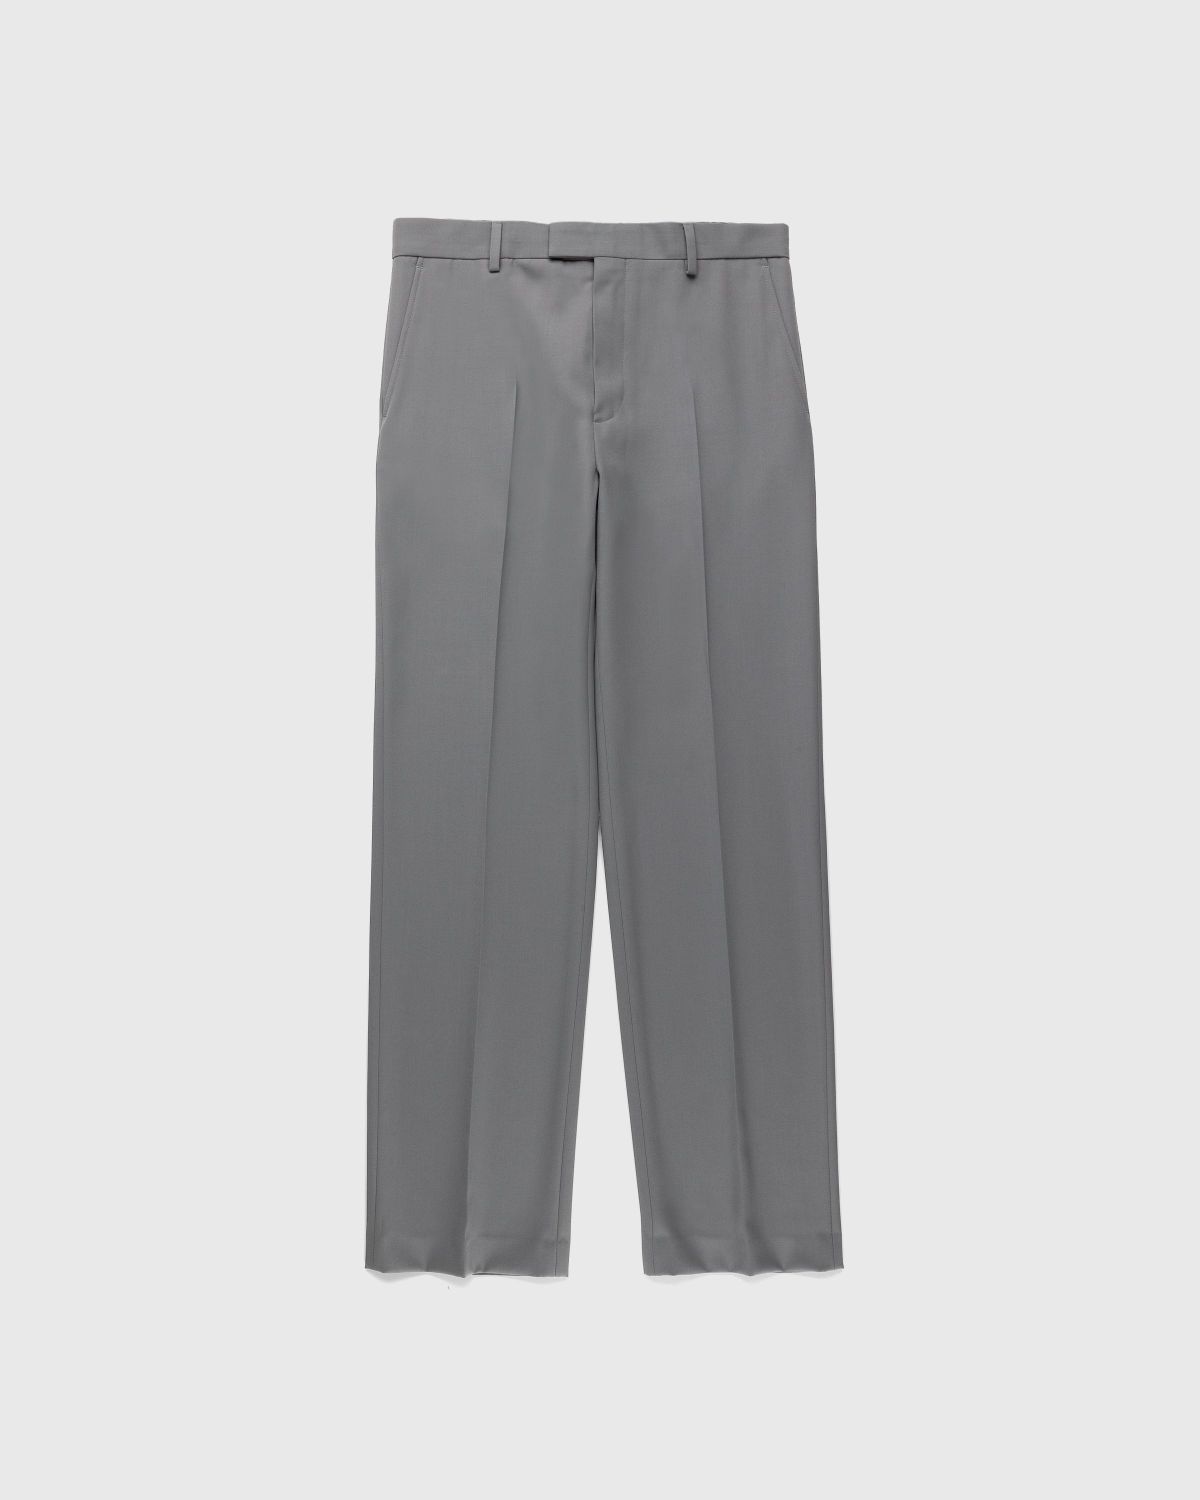 Dries van Noten – Pinnet Long Pants Grey - Trousers - Grey - Image 1